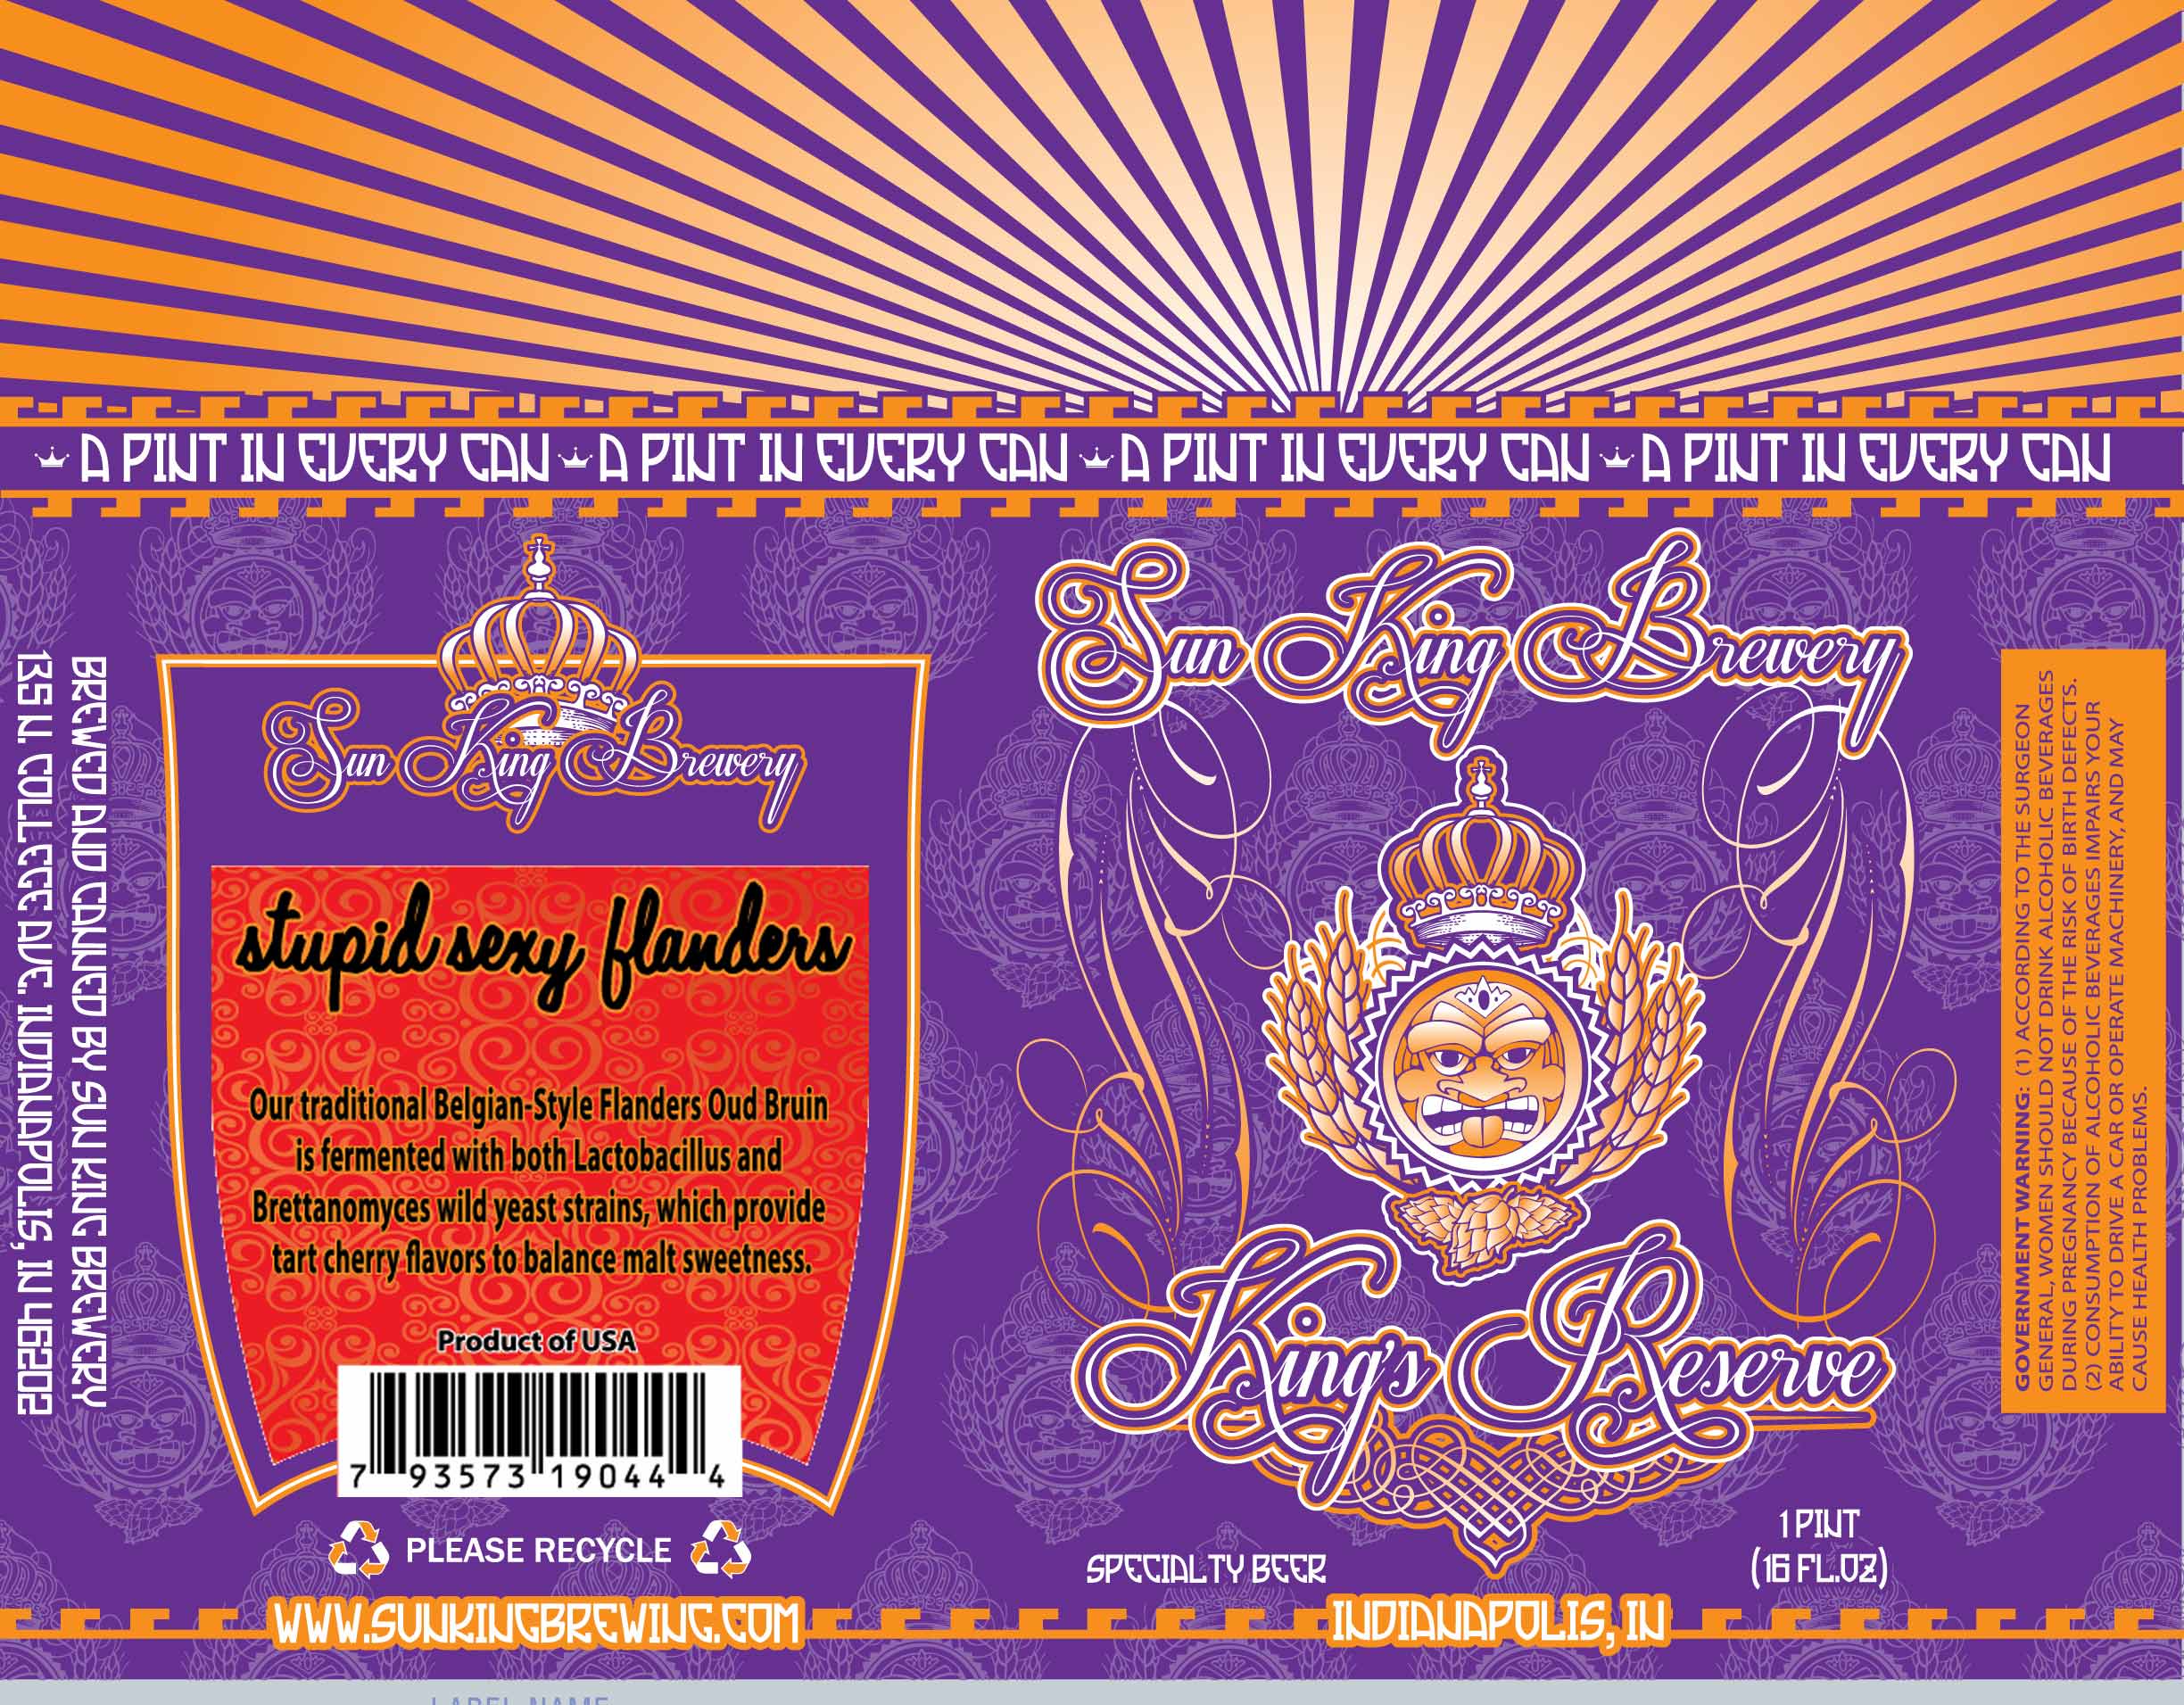 Sun King Brewery Stupid Sexy Flanders